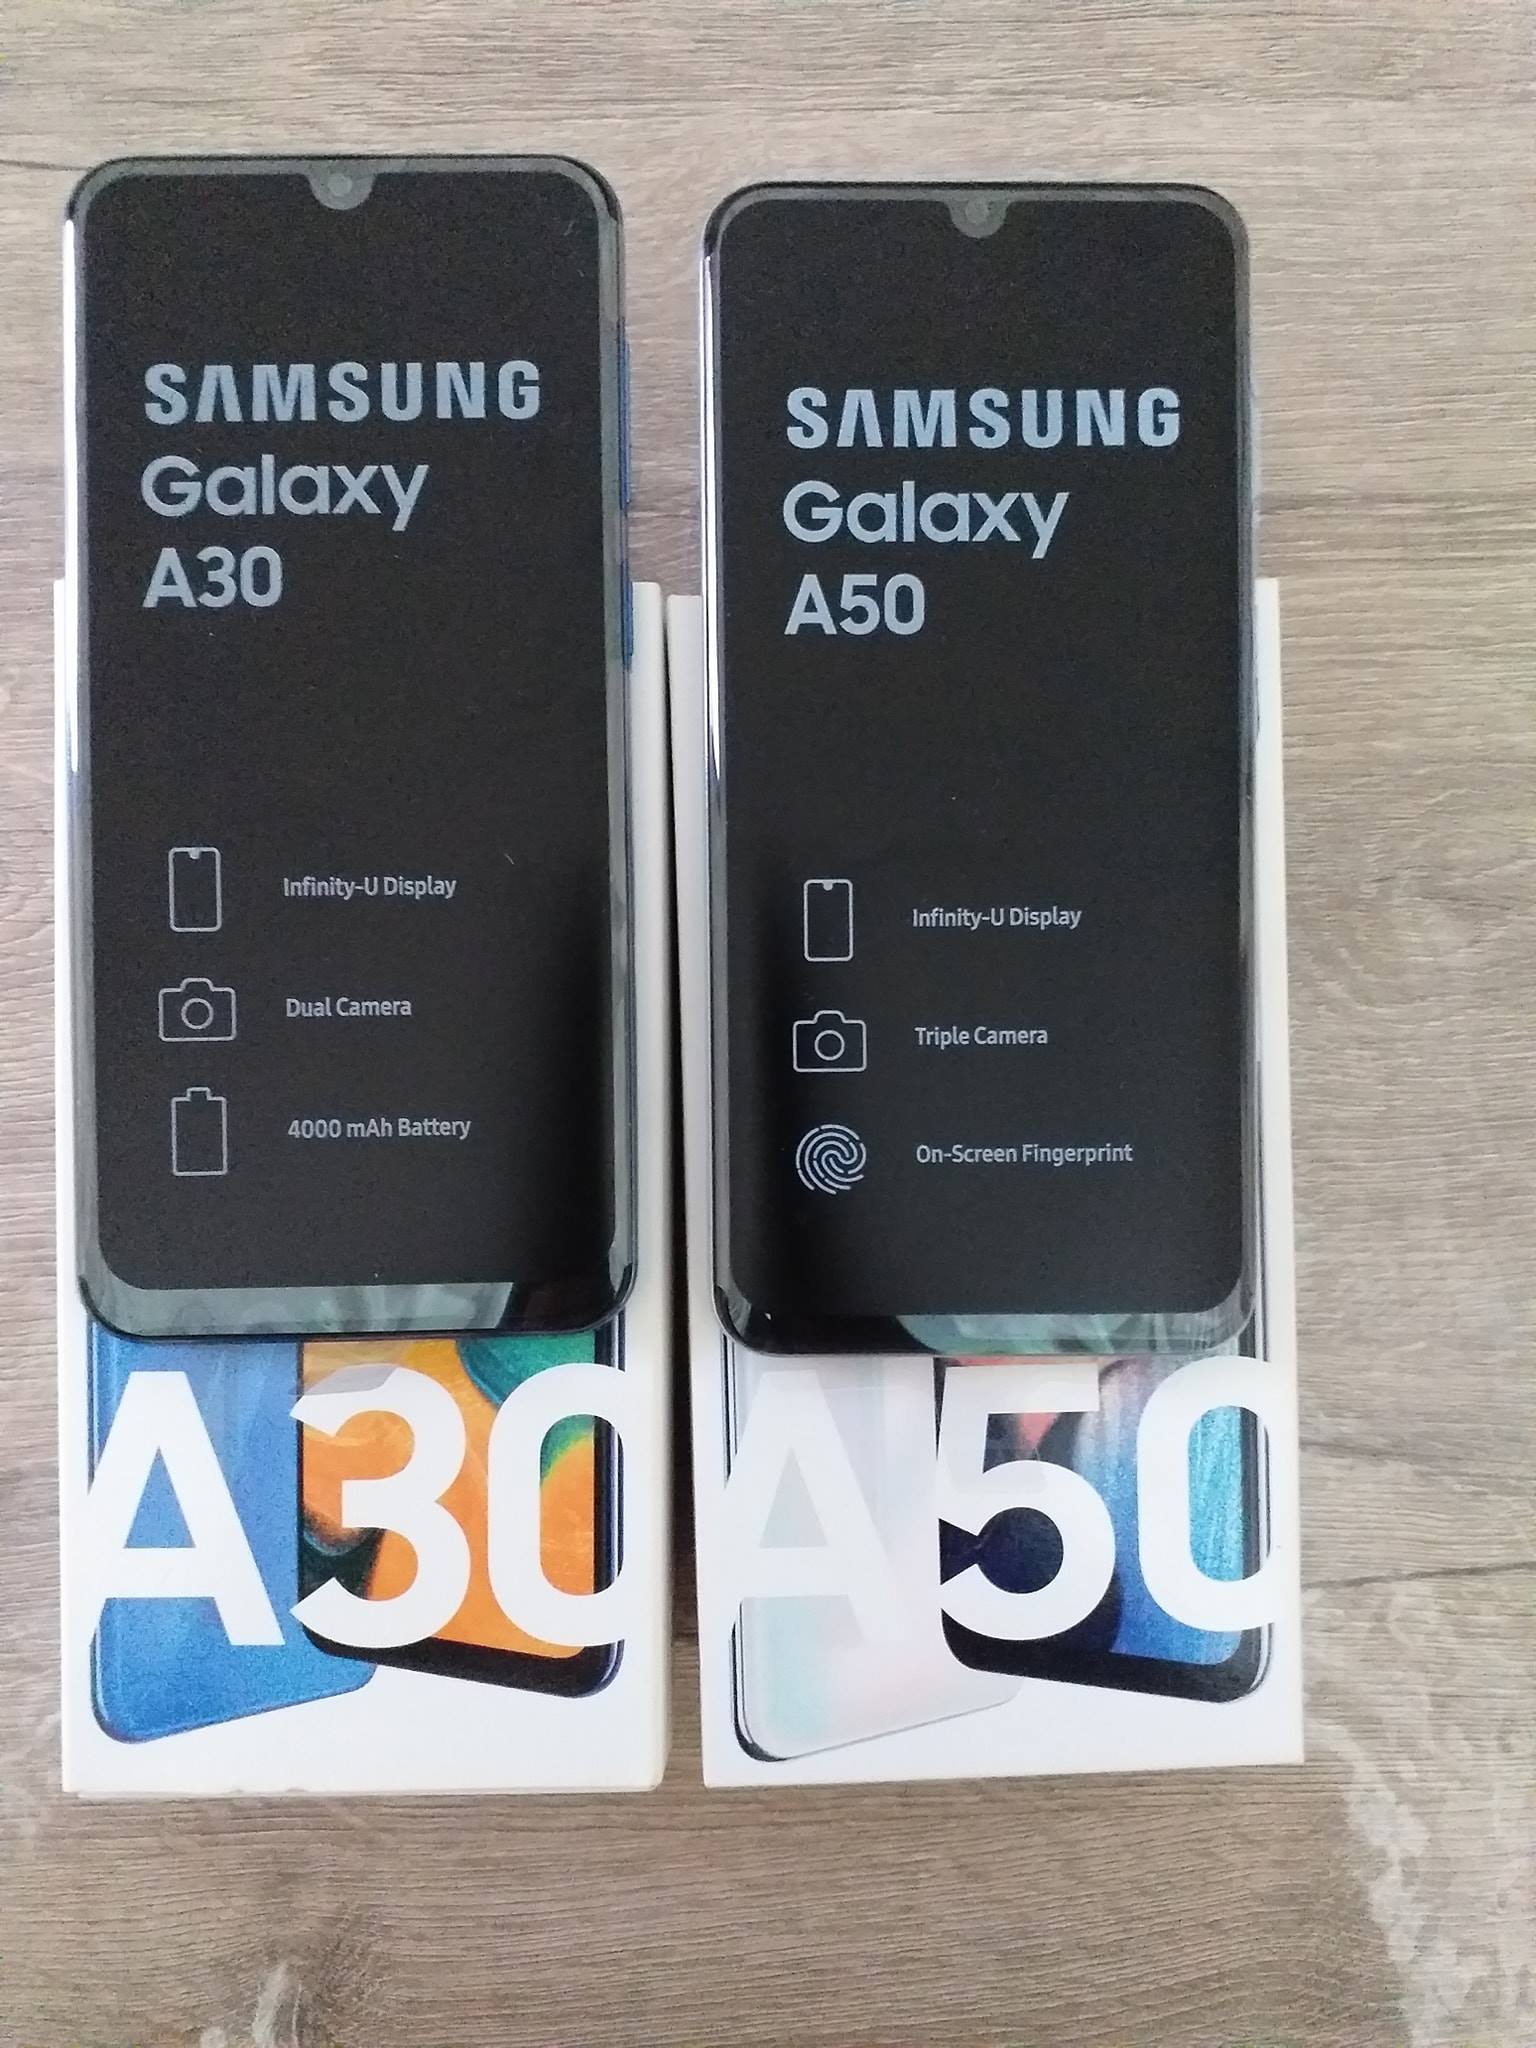 Samsung Galaxy A30 Price in Nigeria